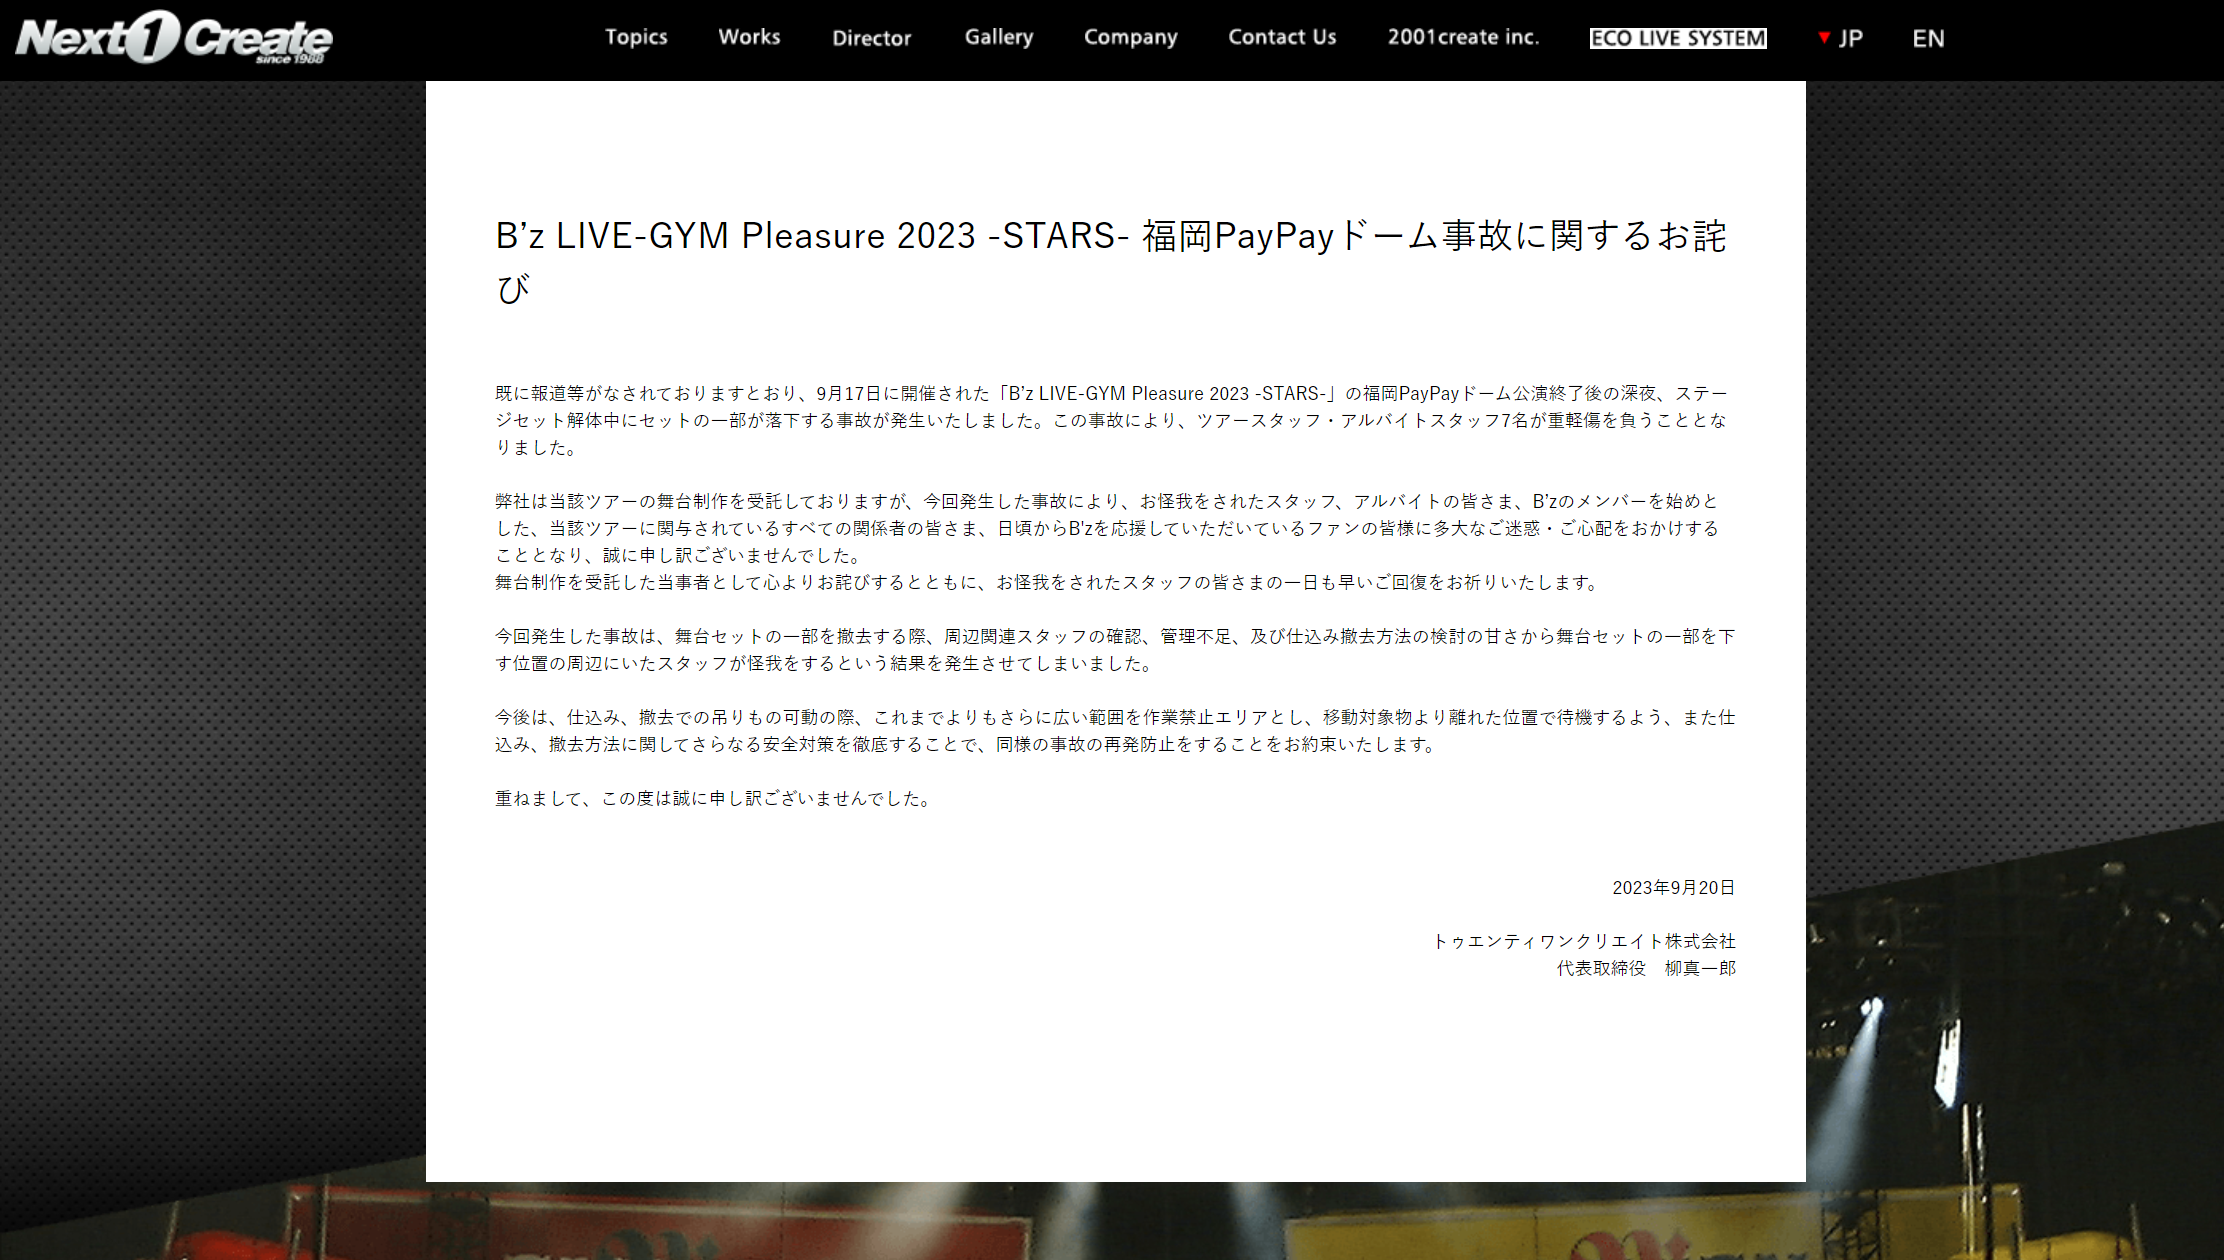 『B'z LIVE-GYM Pleasure 2023 -STARS-』ステージ解体中の事故に関する声明文のキャプチャ画像